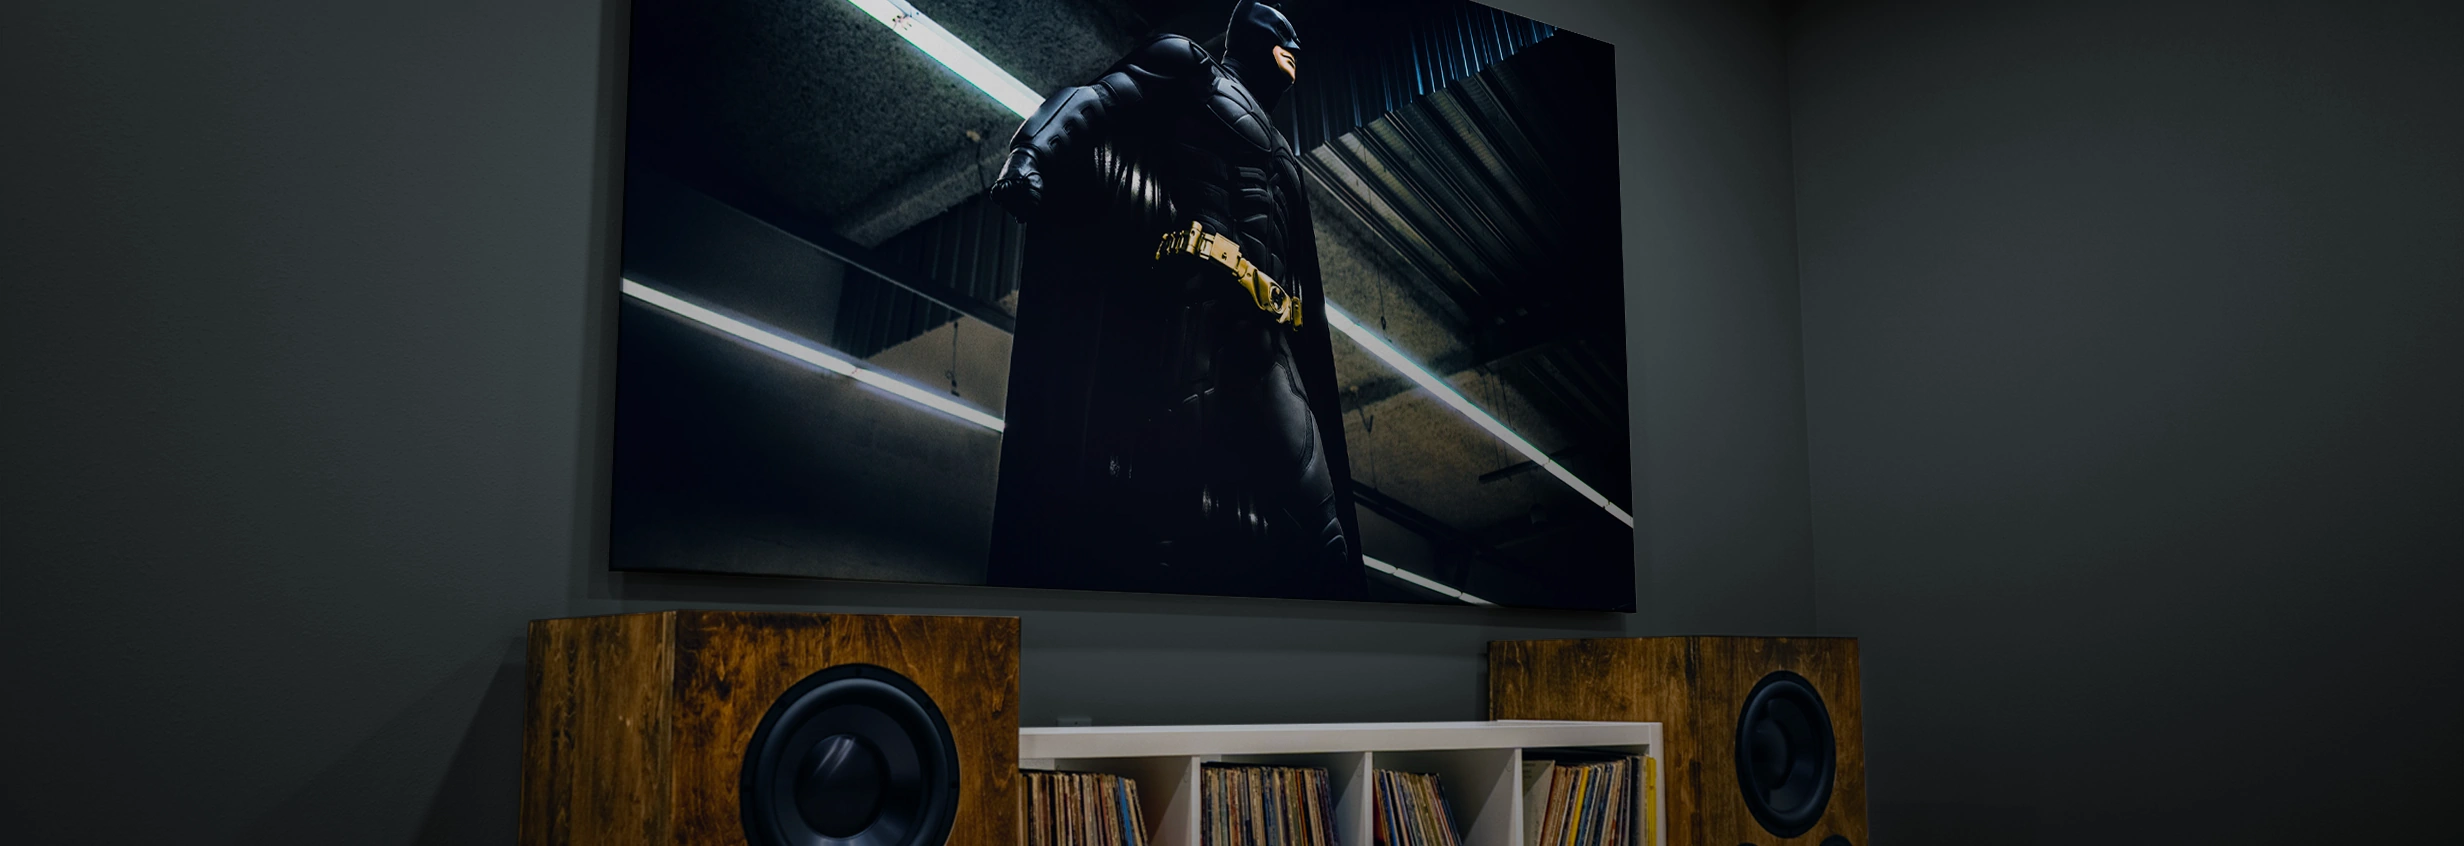 home theater screen showing batman movie